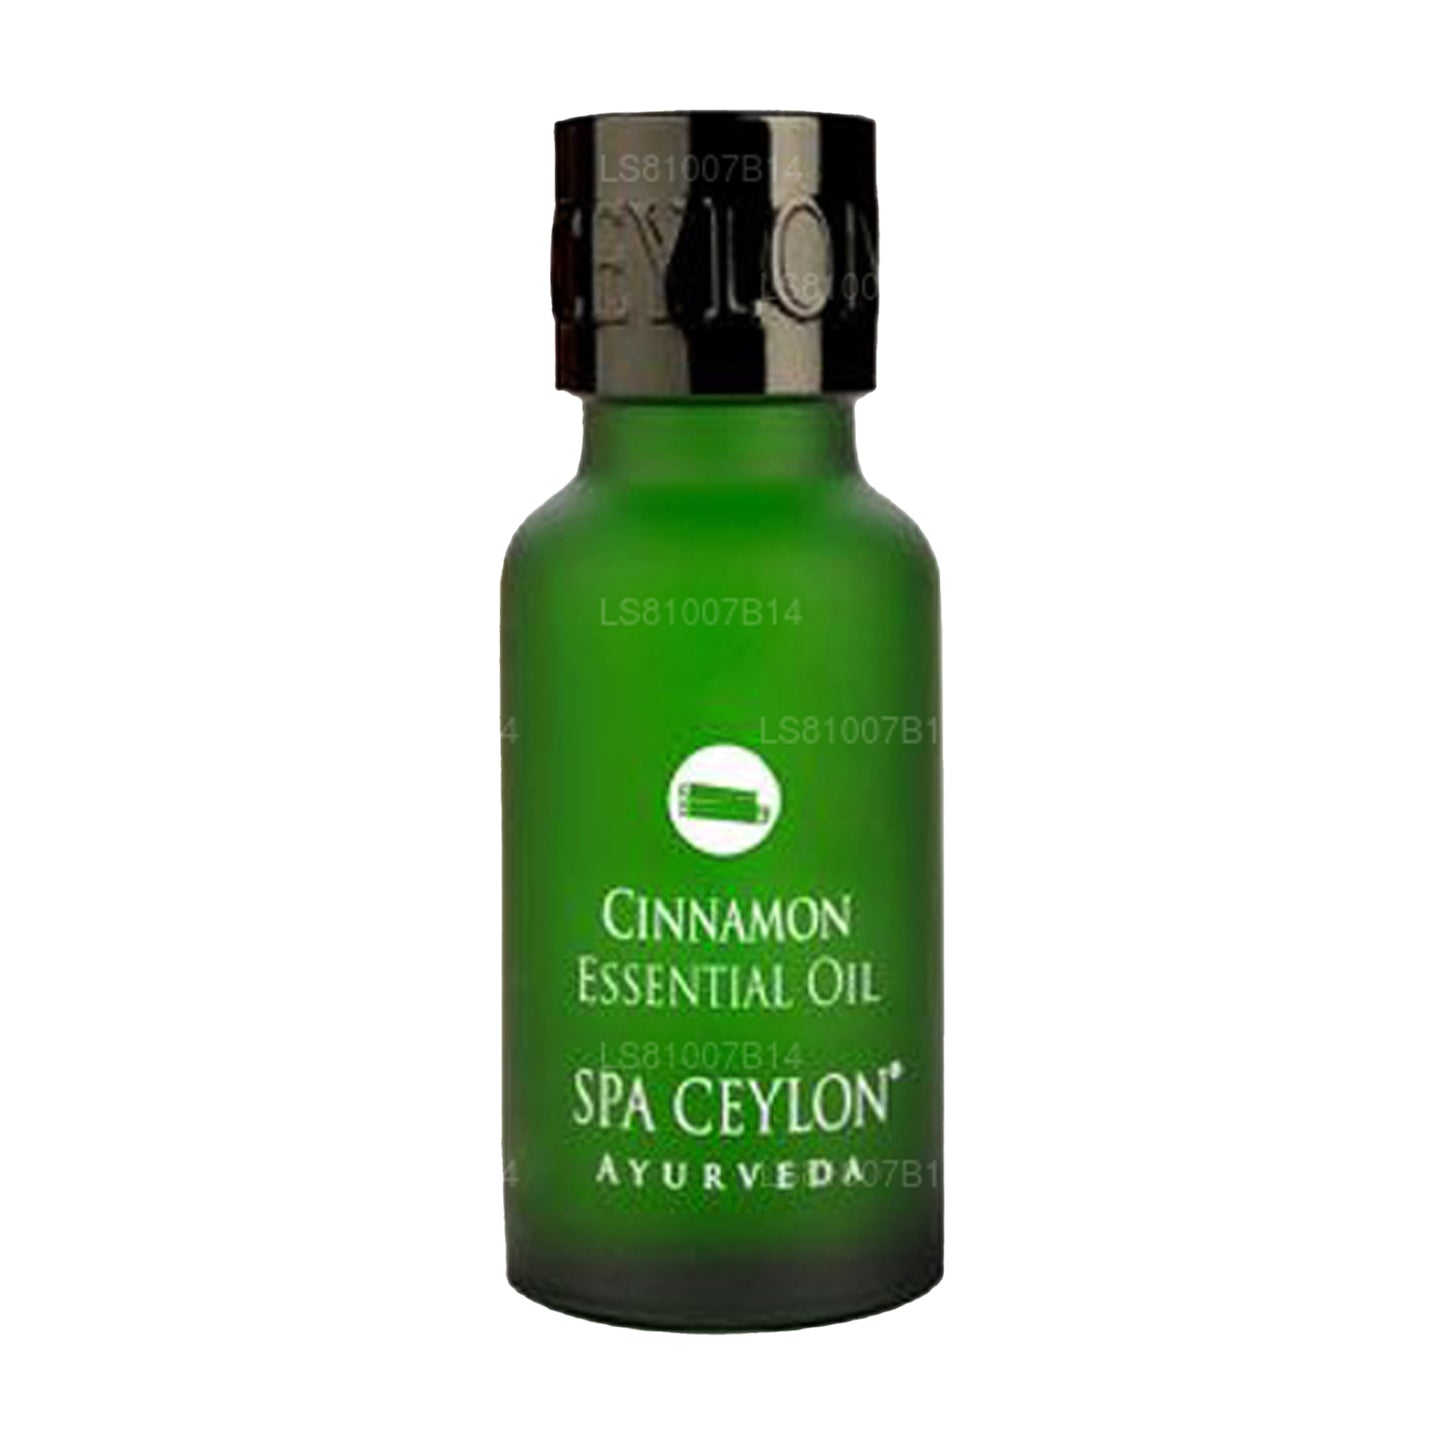 Spa Ceylon Cinnamon - Essential Oil (20ml)